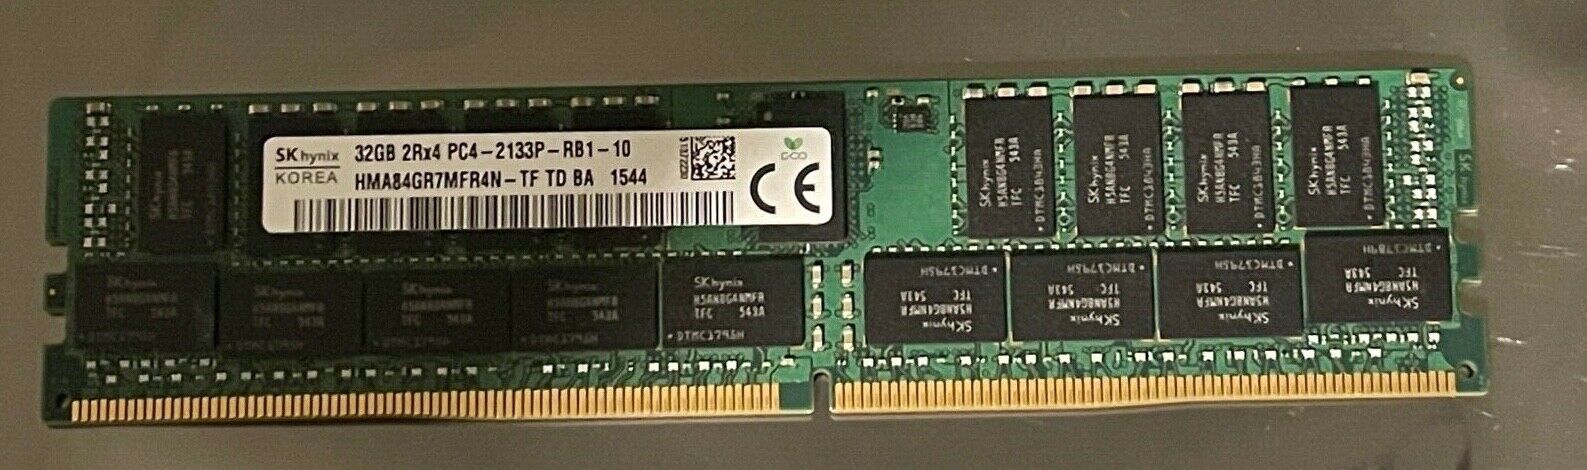 Hynix 32GB 2Rx4 PC4-2133P RDIMM DDR4-17000 ECC REG Server Memory RAM HMA84GR7MFR